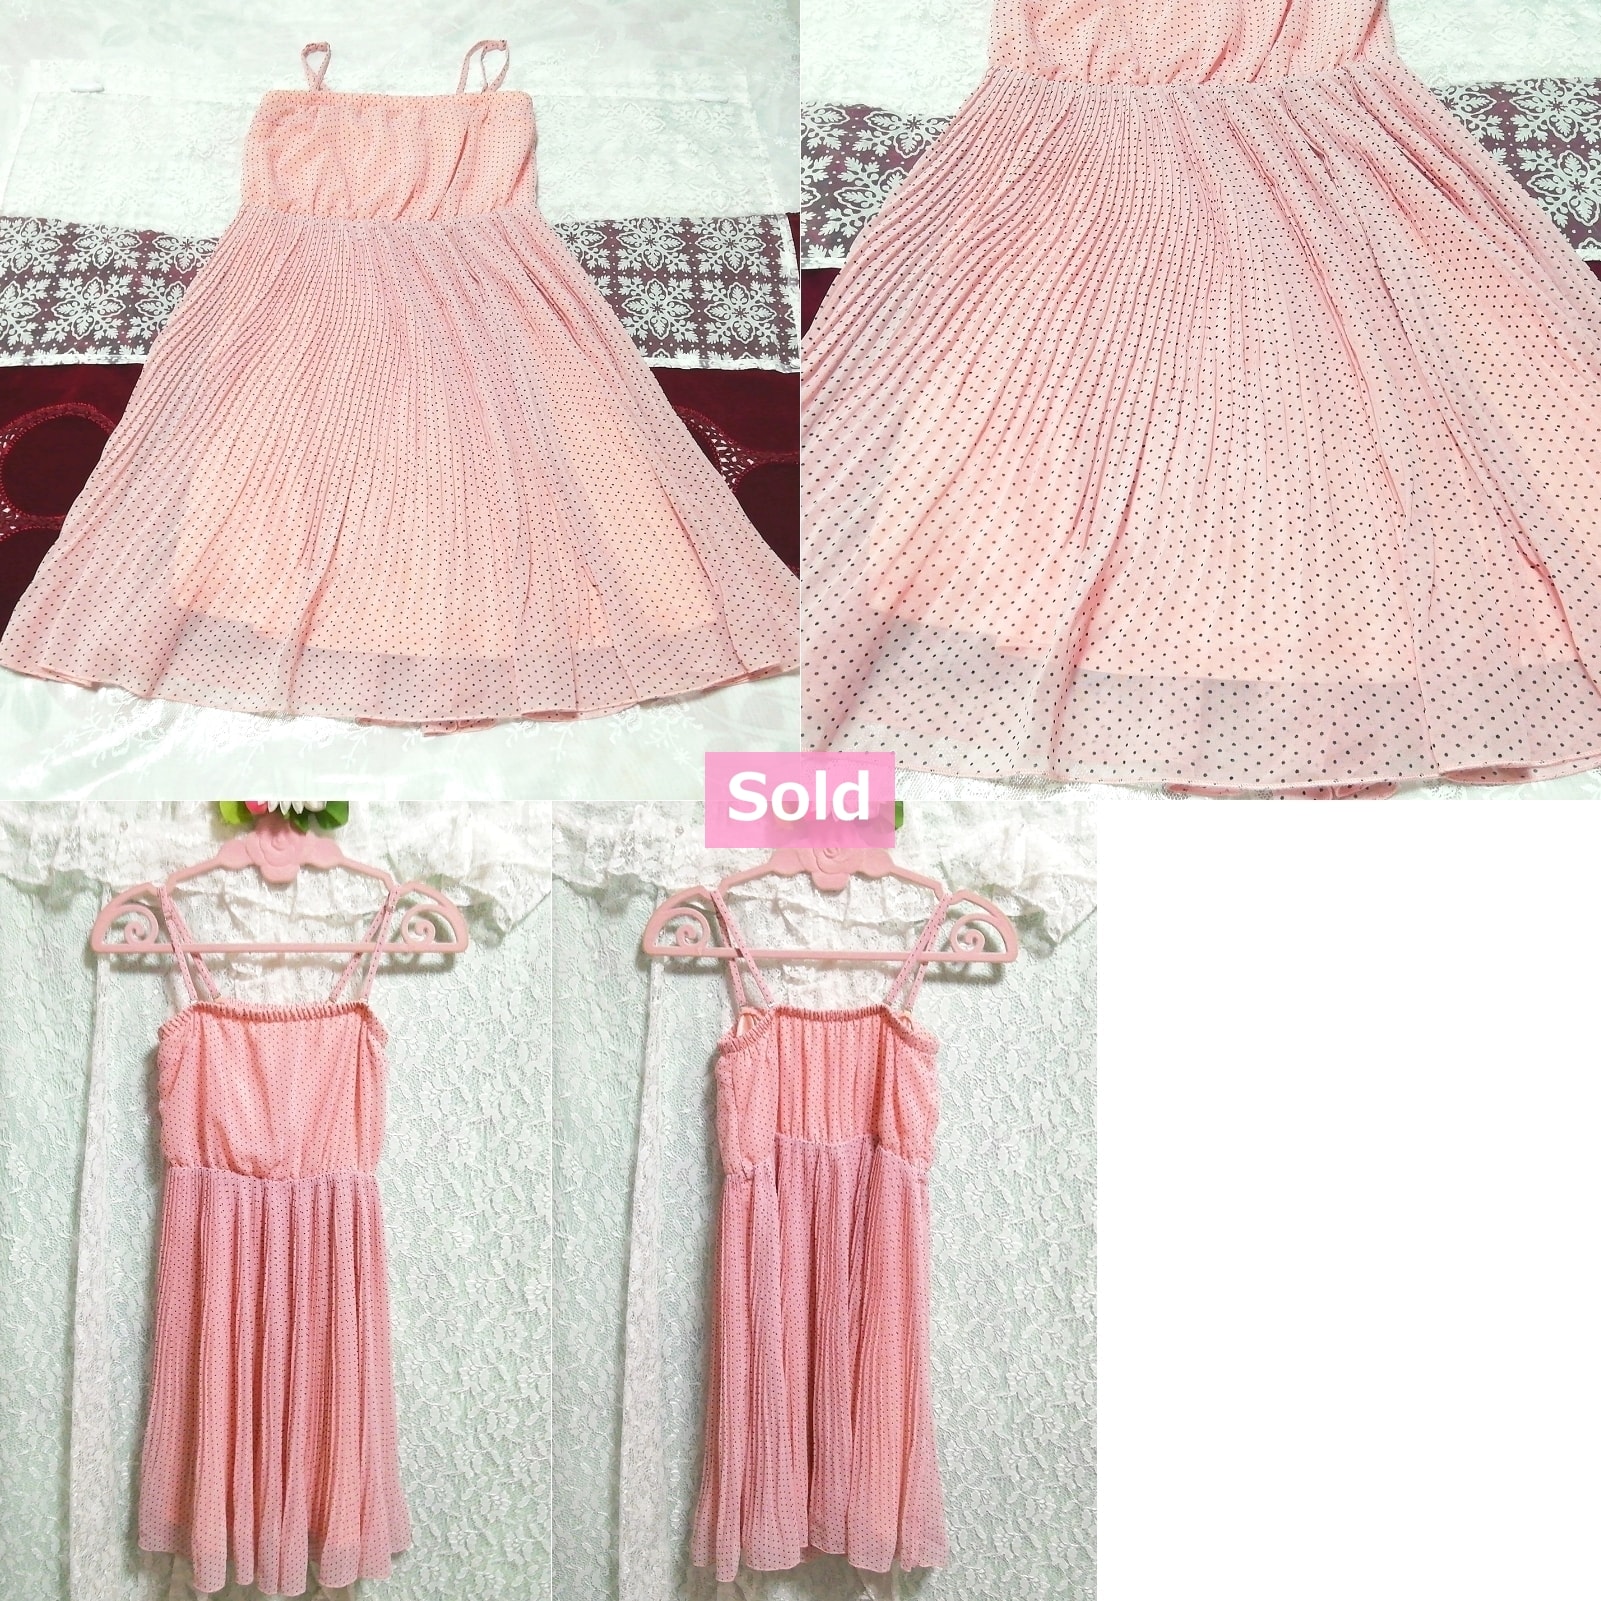 Pink polka dot chiffon negligee camisole babydoll dress, fashion & ladies fashion & camisole